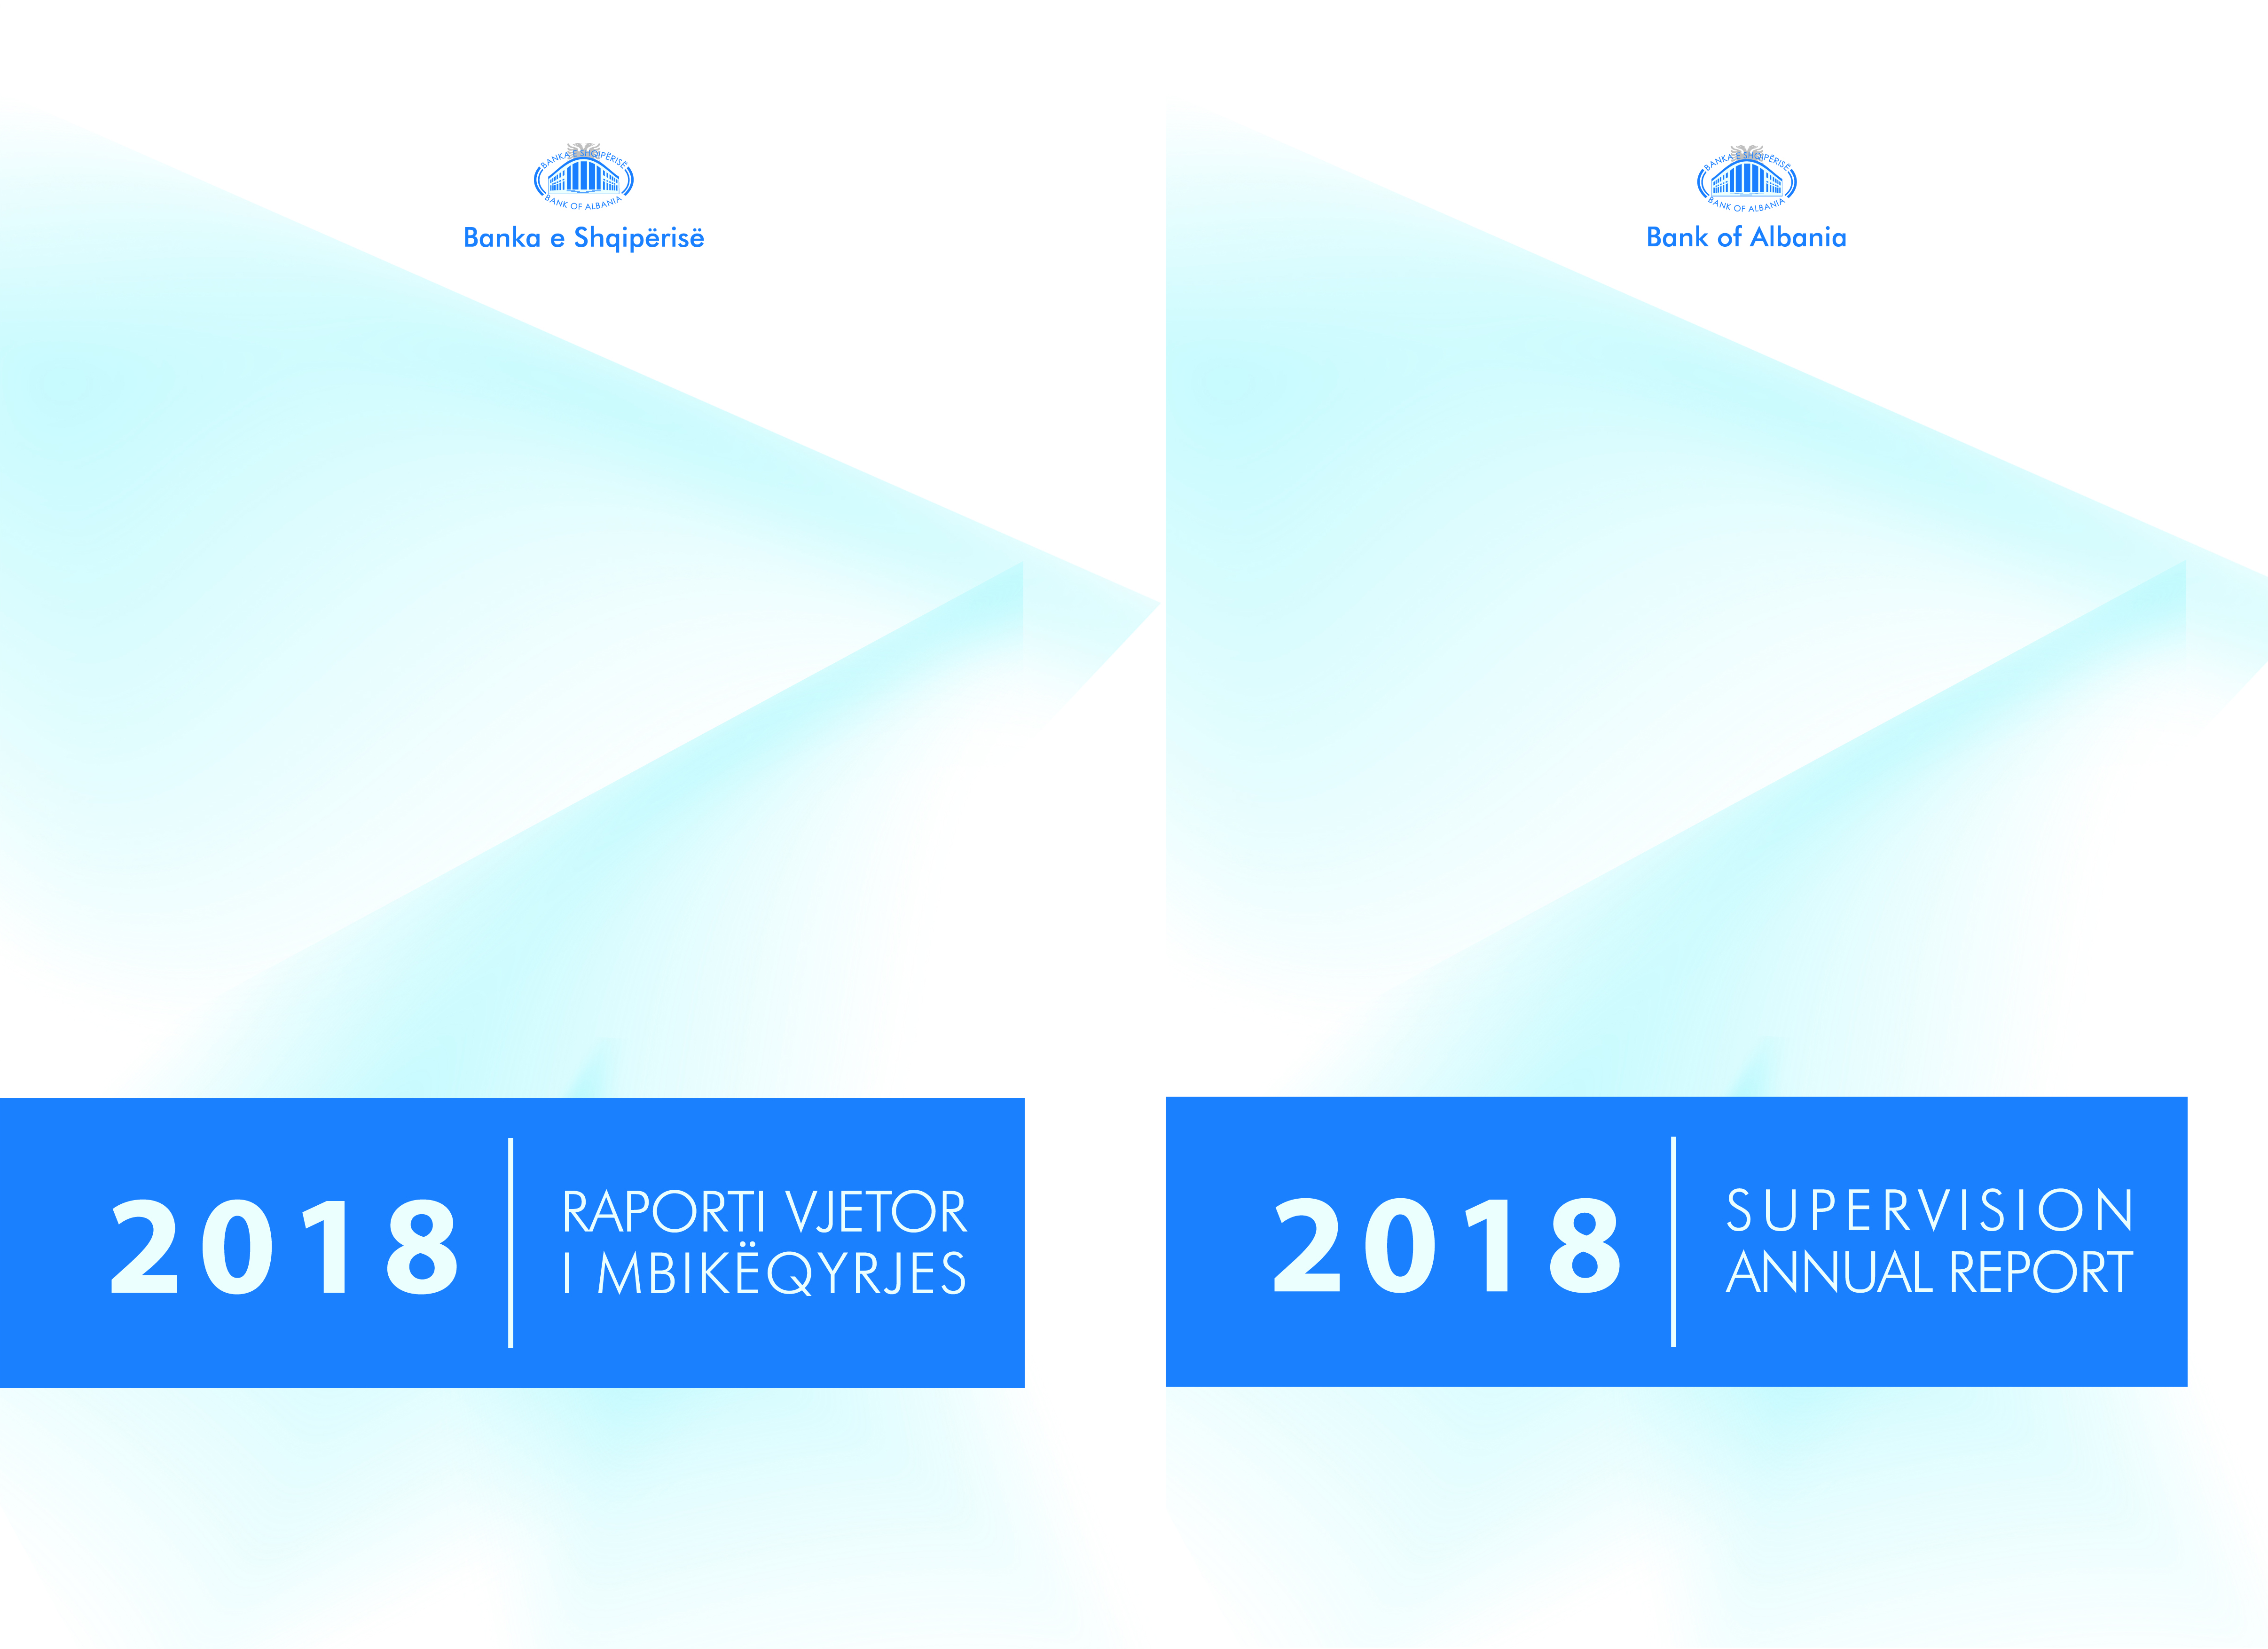 Annual Supervision Report 2018